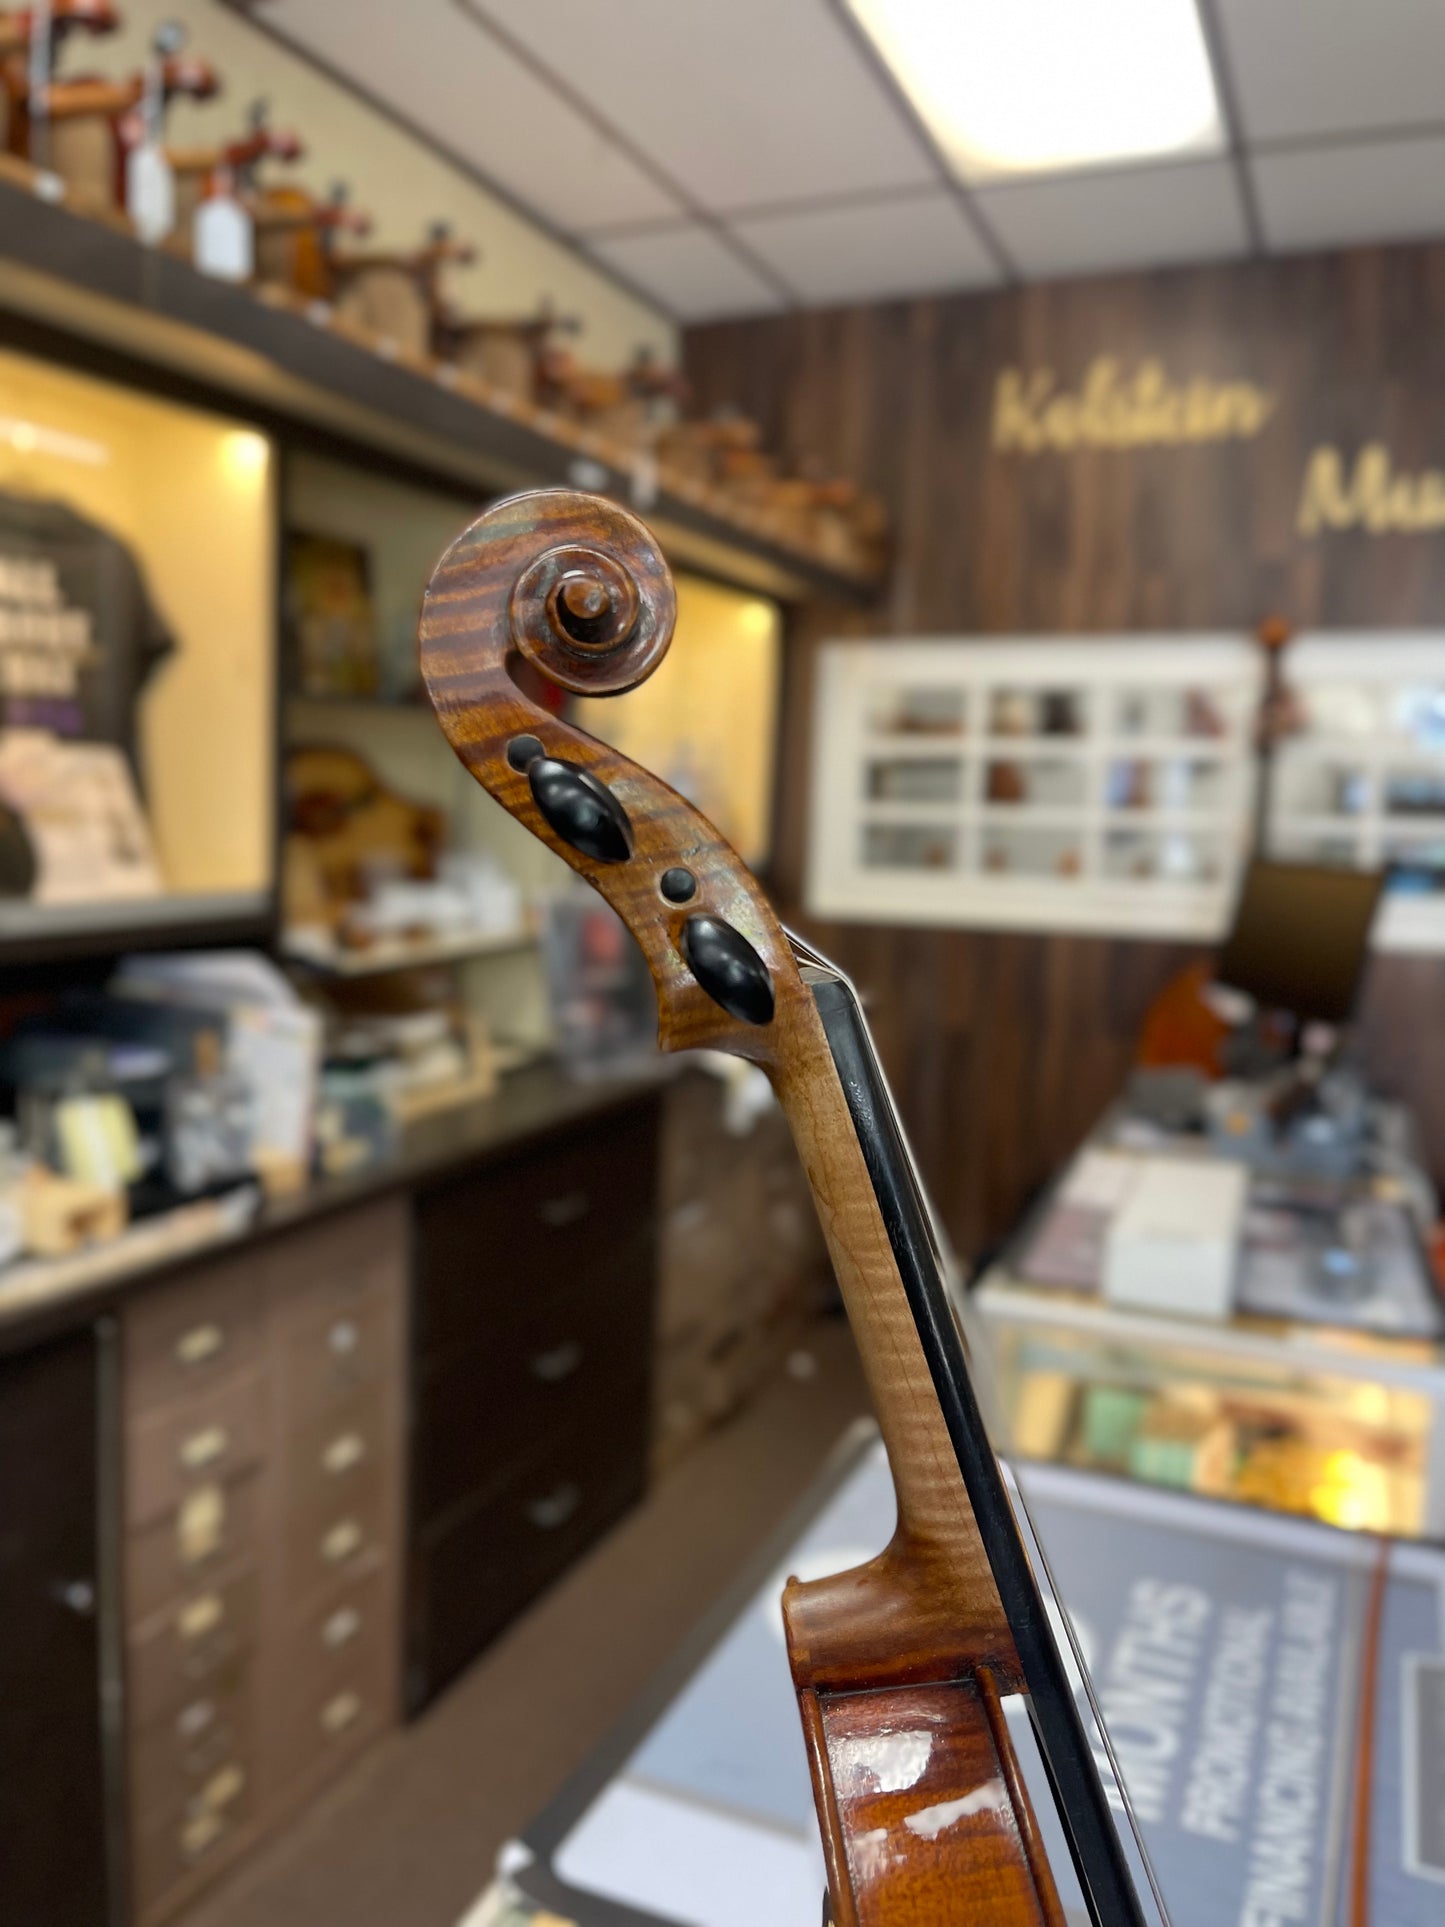 Liandro DiVacenza Master Art Model Violin